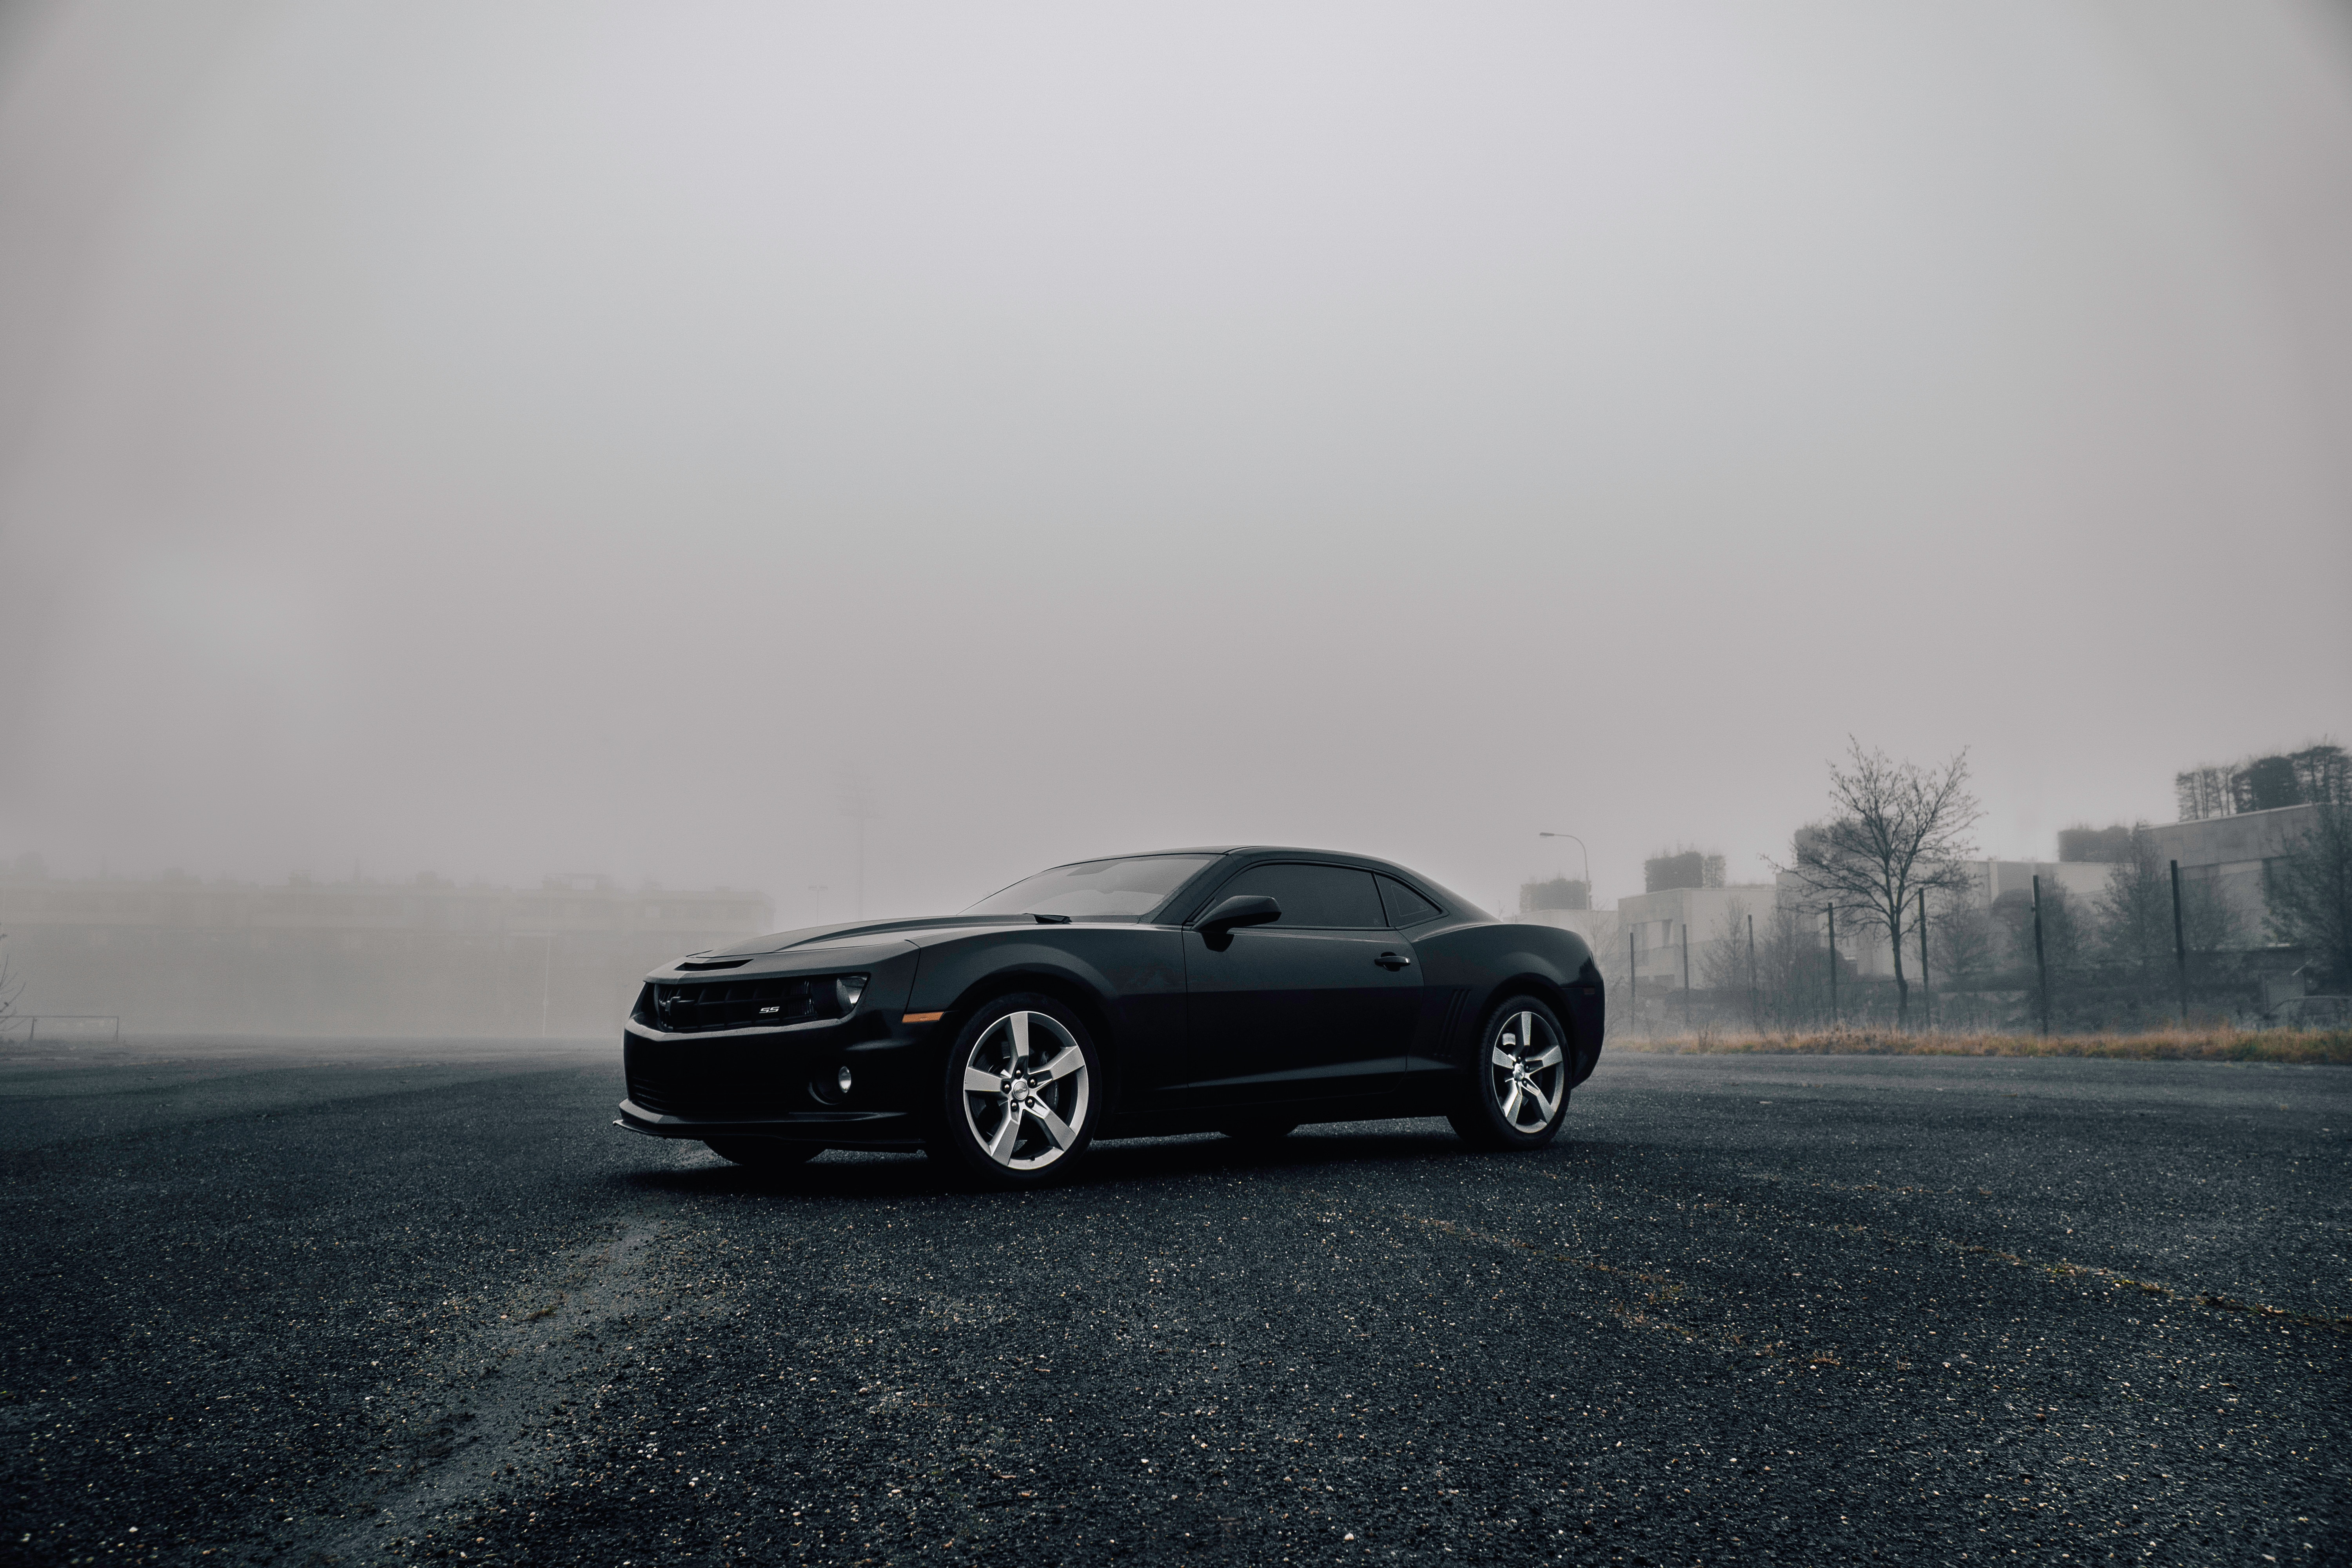 chevrolet camaro, cars, chevrolet, fog, side view